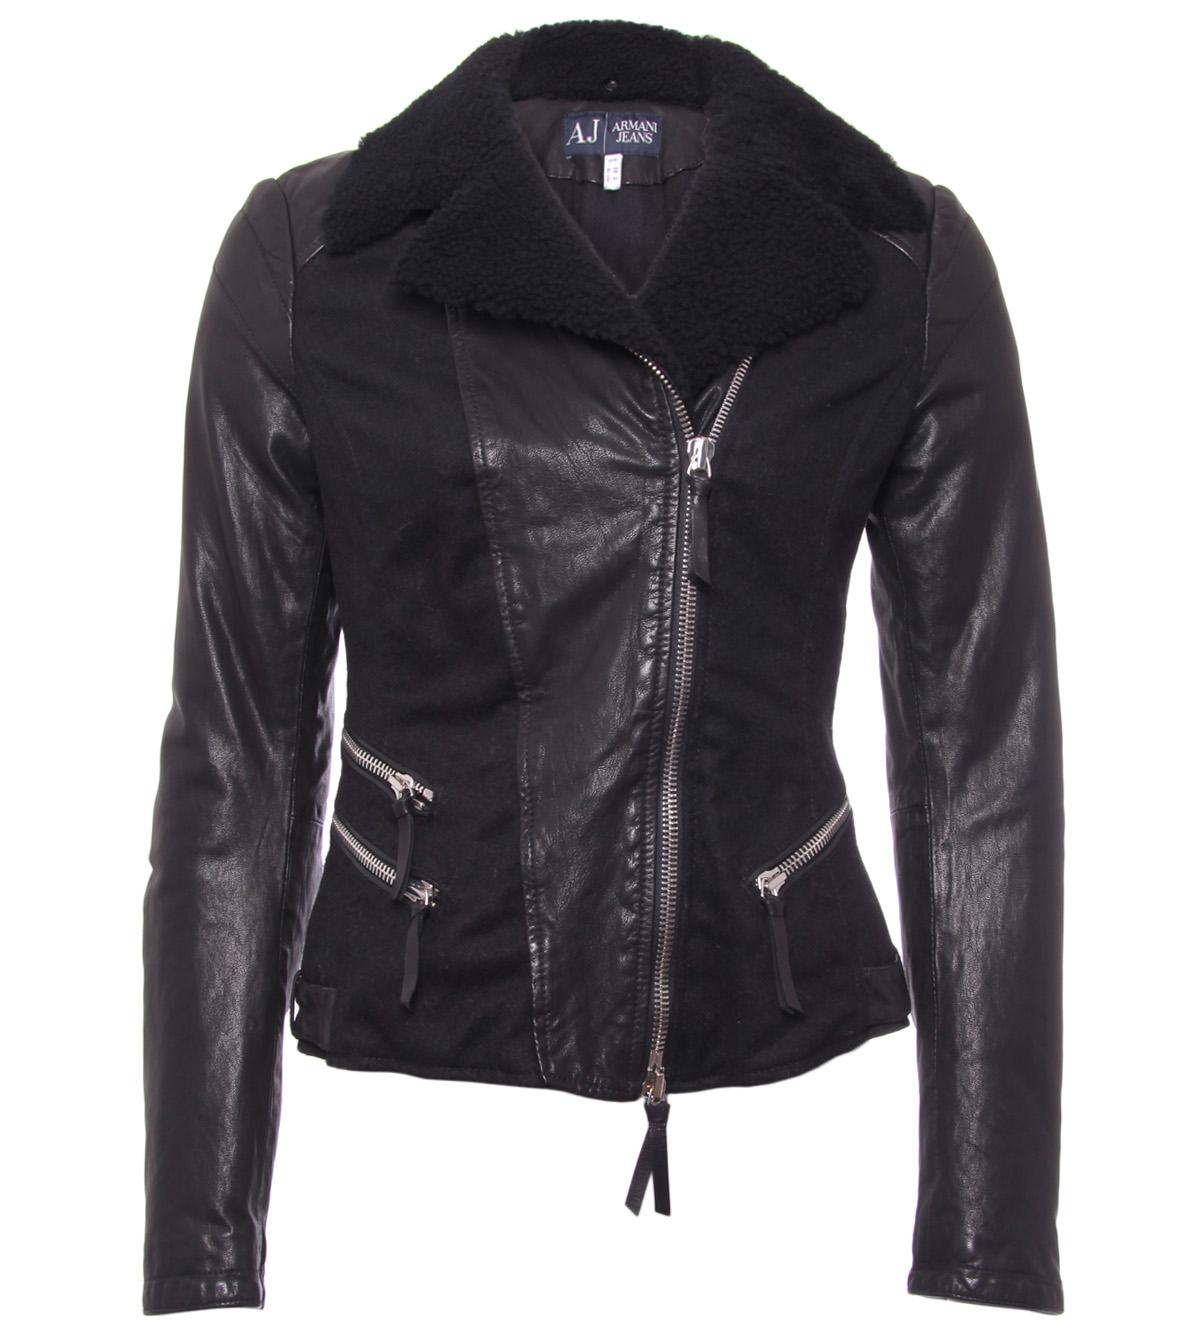 Foto Armani Jeans Black Leather/Wool Jacket foto 362503